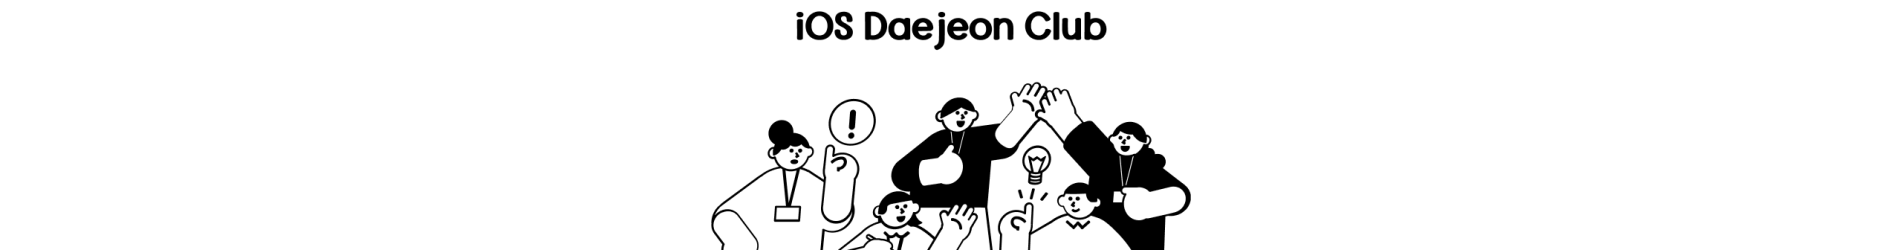 iOS Daejeon Club